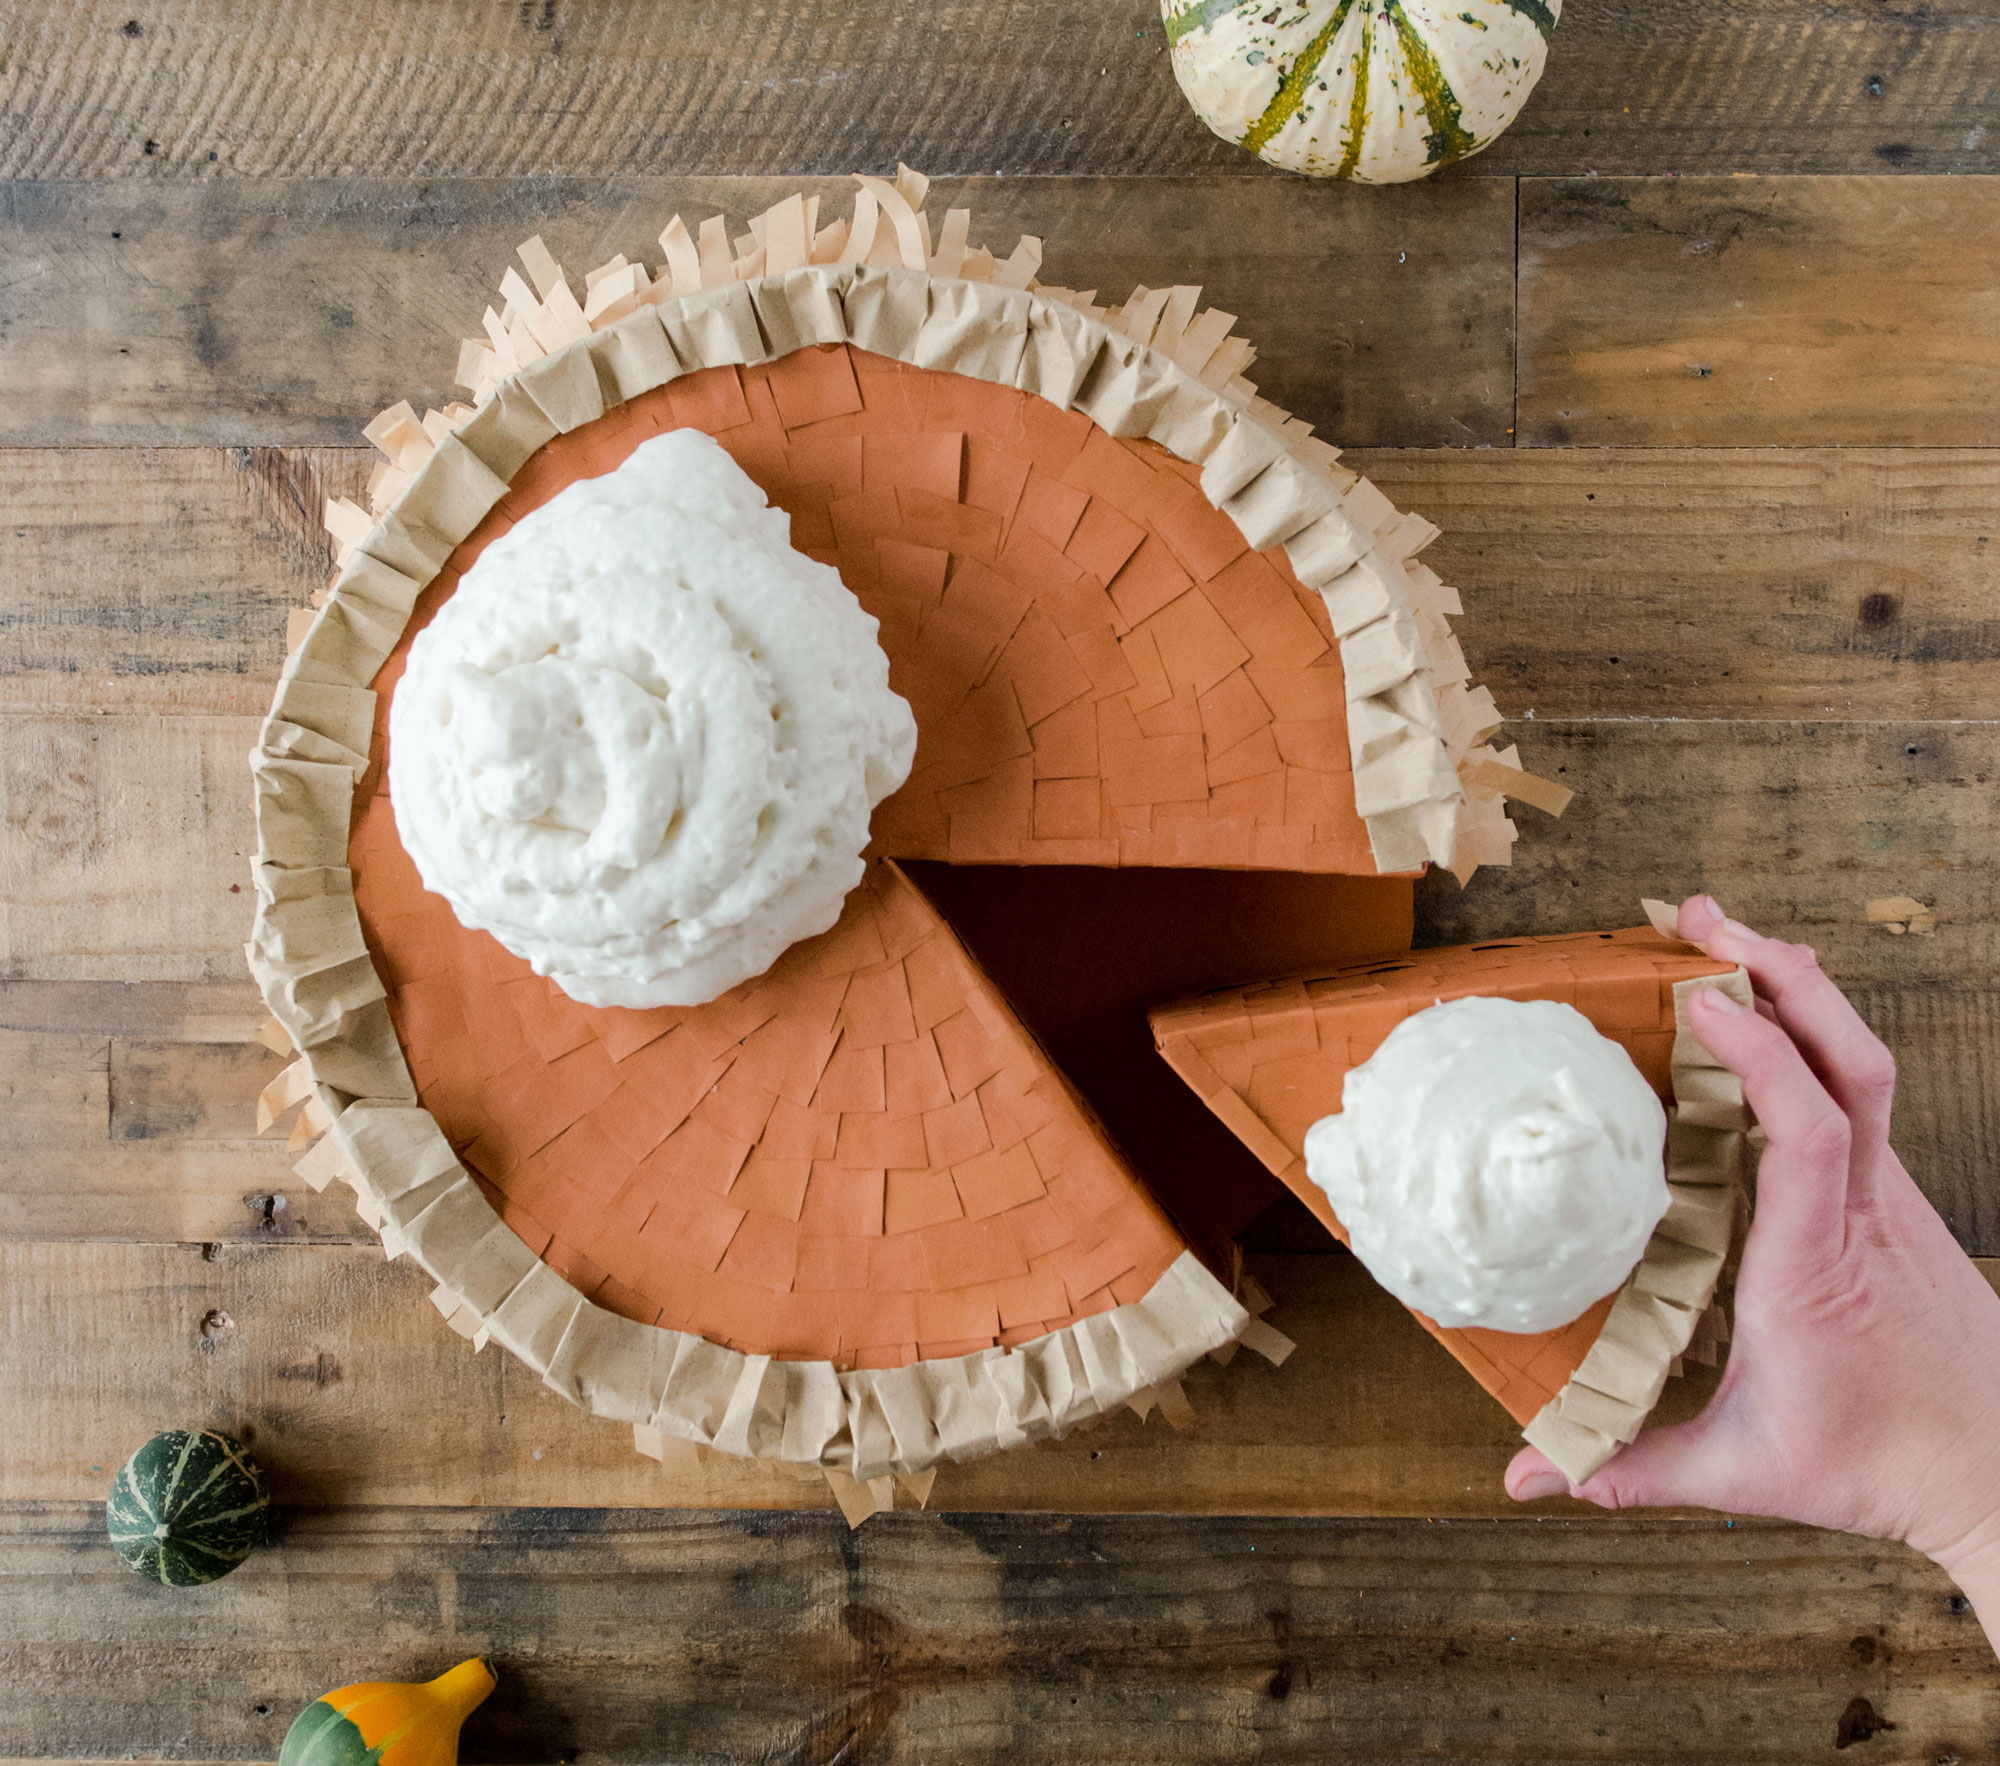 How to make a pumpkin pie piñata for Thanksgiving!